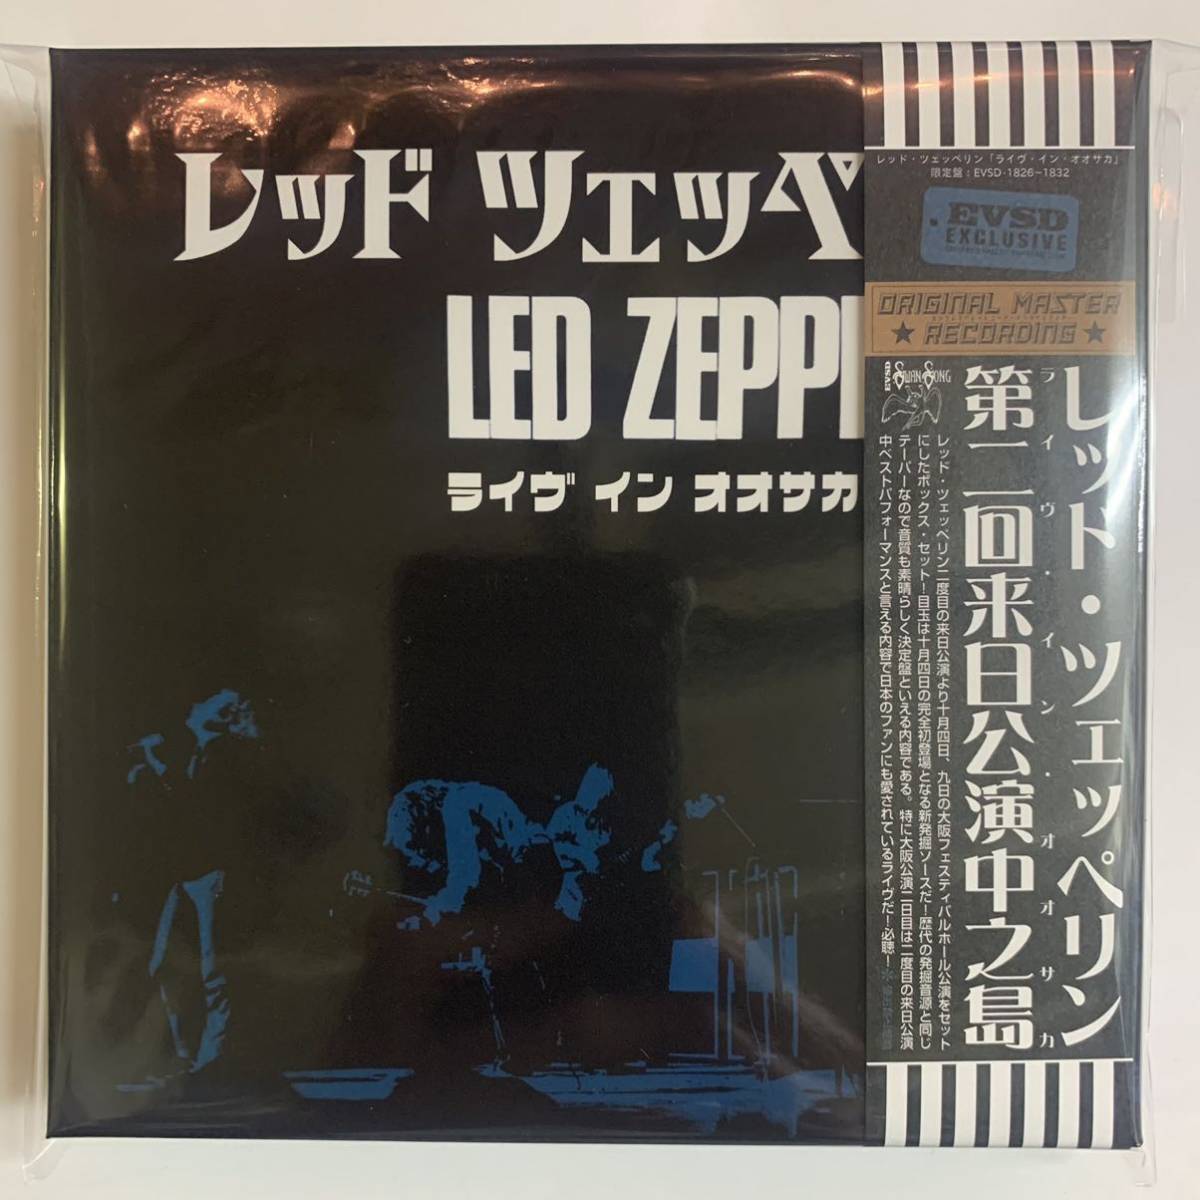 Yahoo!オークション -「武道館」(Led Zeppelin) (ハードロック)の落札 